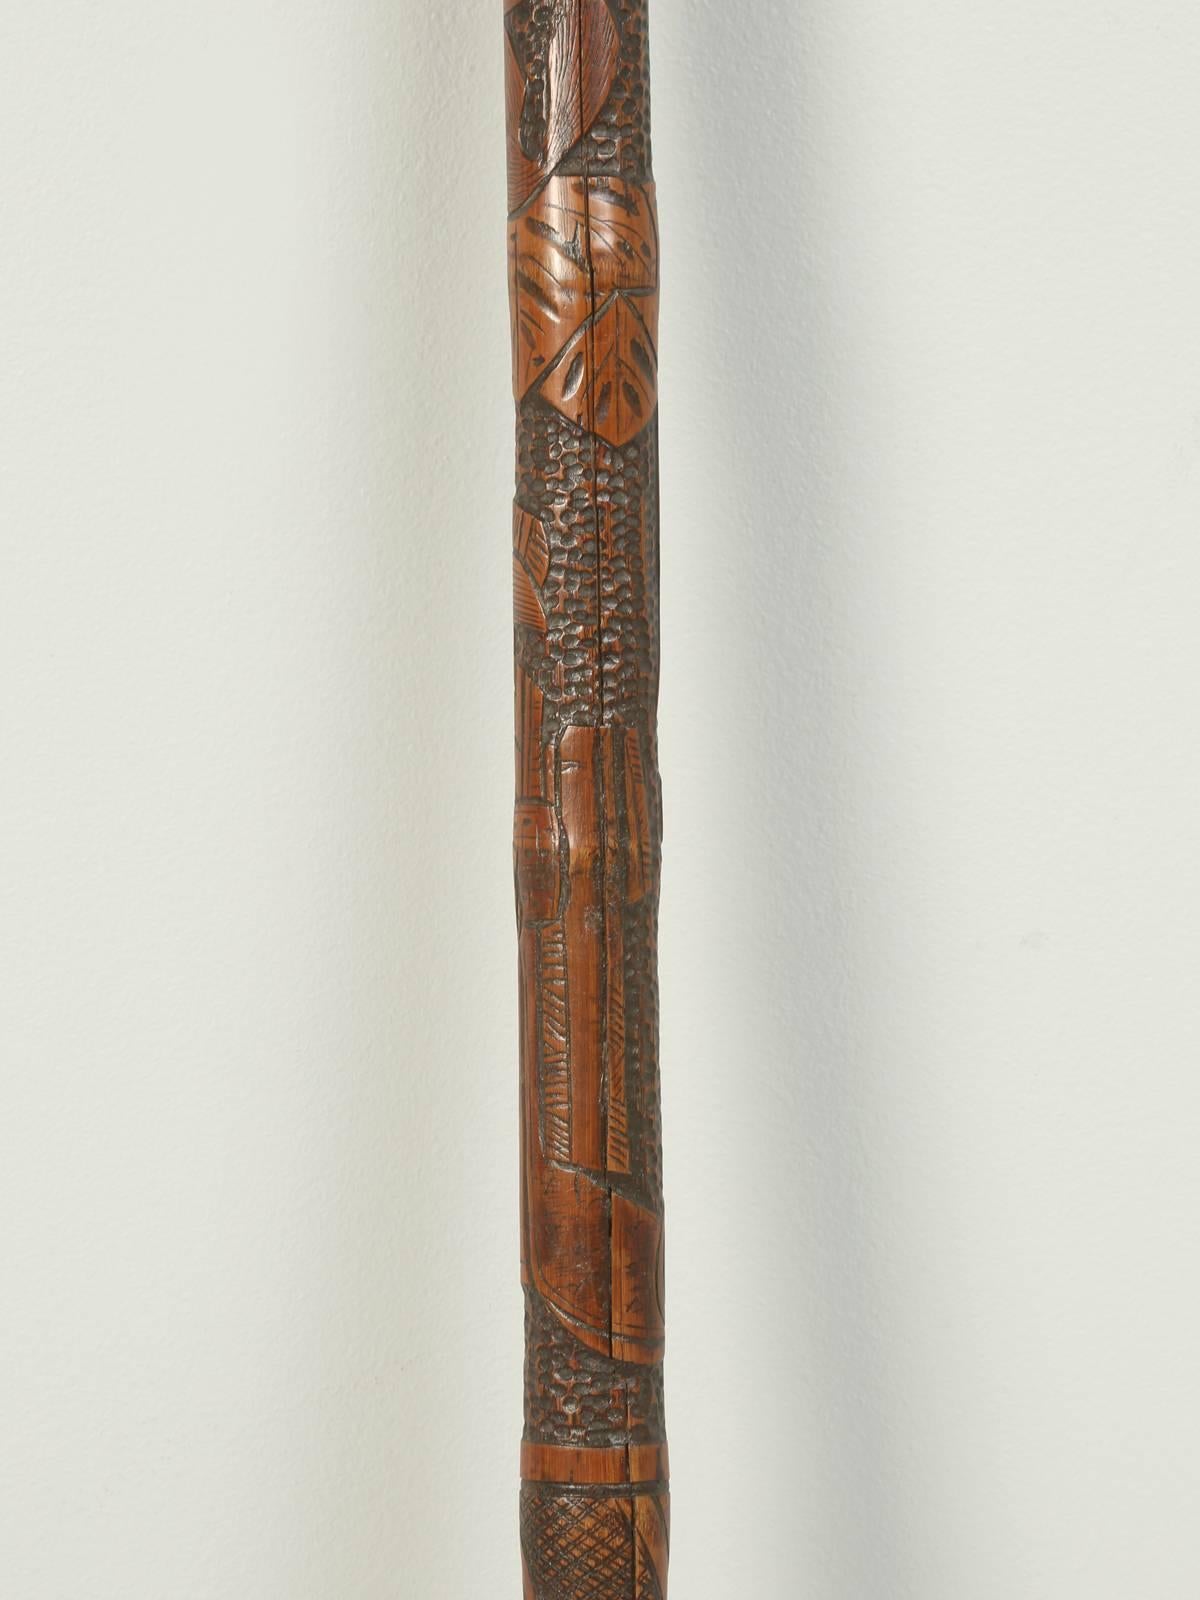 Folk Art Antique Walking Stick or Cane That Has a Hidden Large Sword Inside